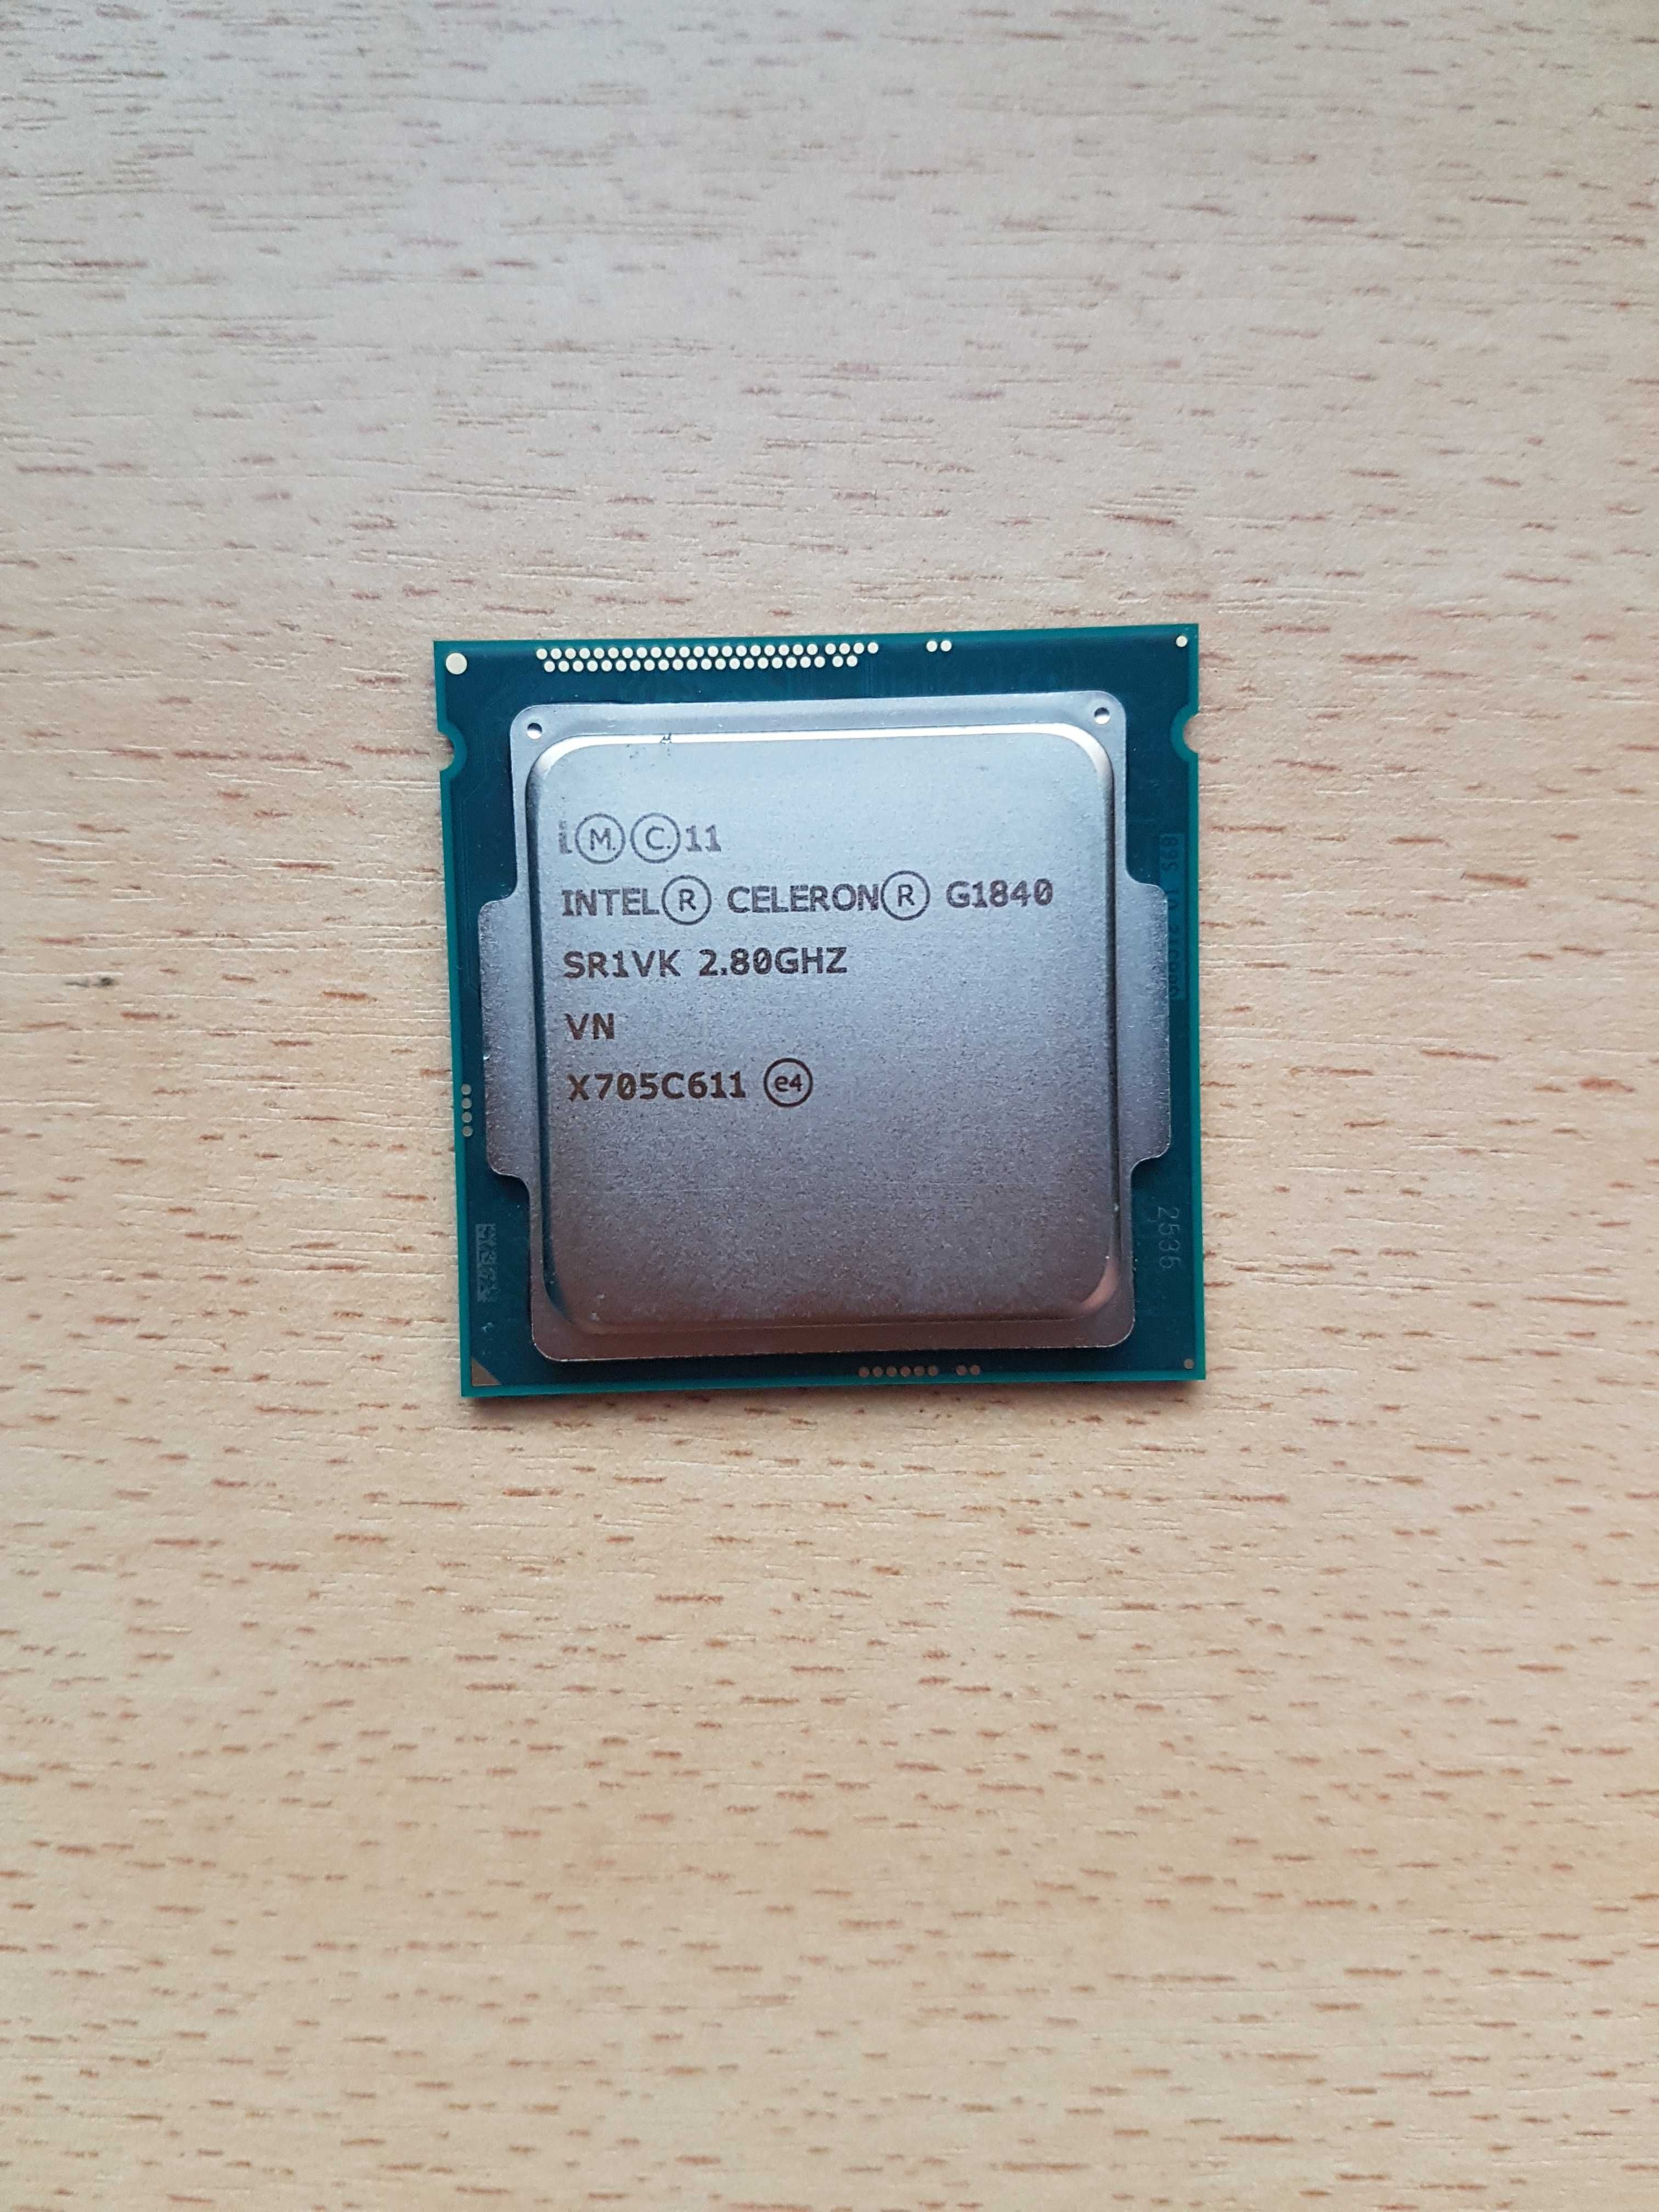 Procesor Intel Celeron G1840, 2800MHz, Haswell, 2MB, socket 1150